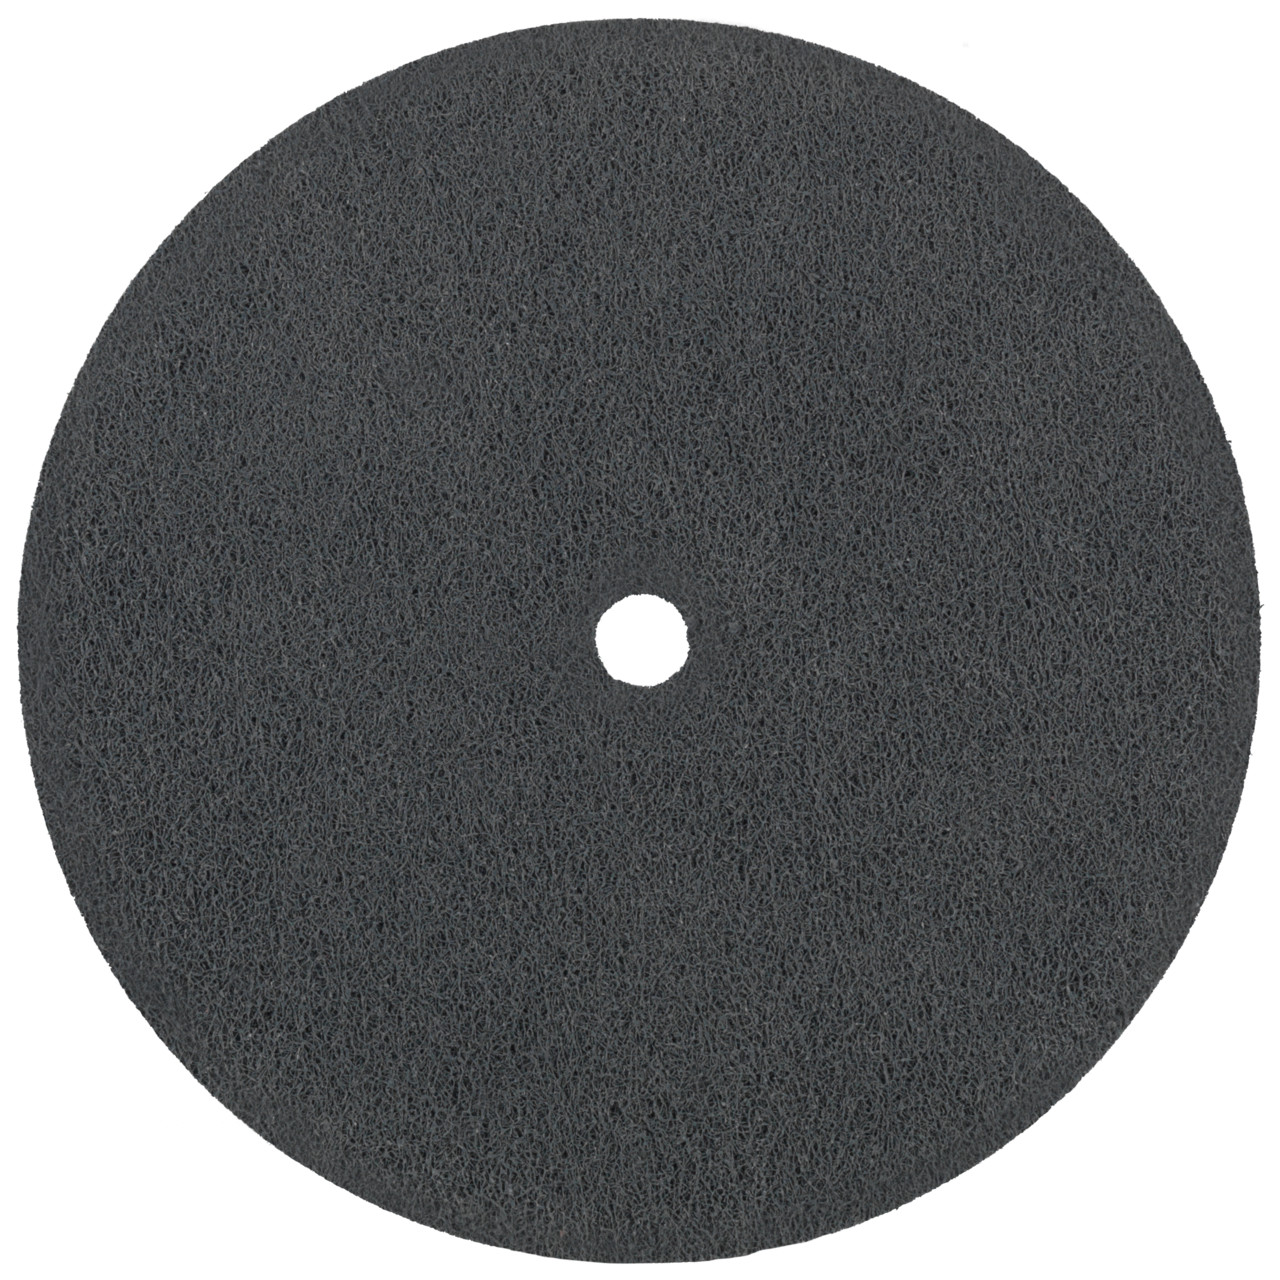 Tyrolit Compact disc pressati DxDxH 152x25x25.4 Inserto universale, 3 C FEIN, forma: 1, Art. 34190306